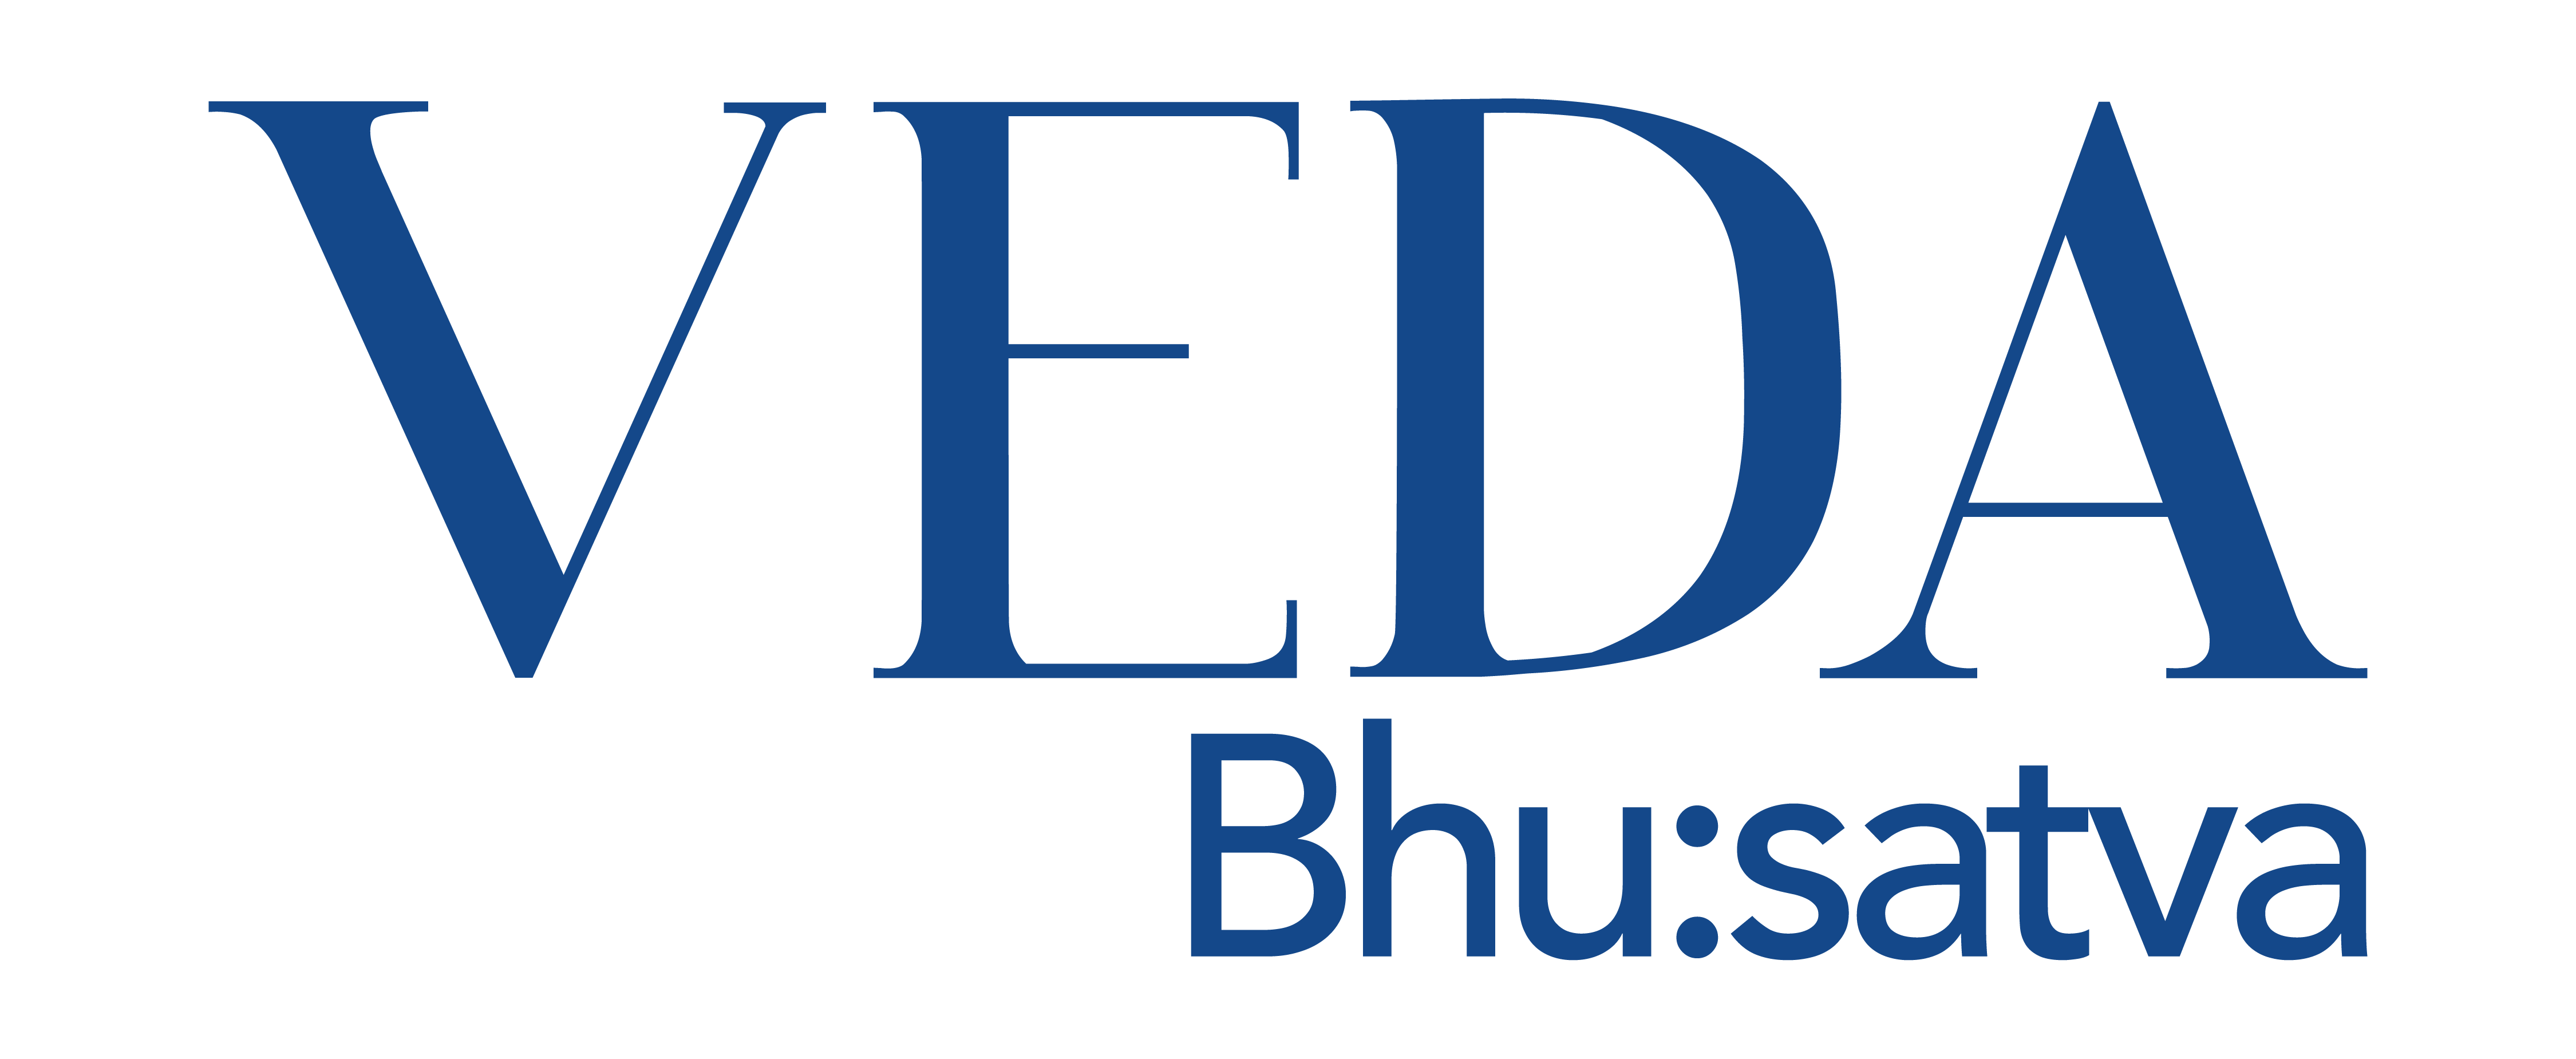 VEDA - Custom Villa Projects in Hyderabad, Telangana